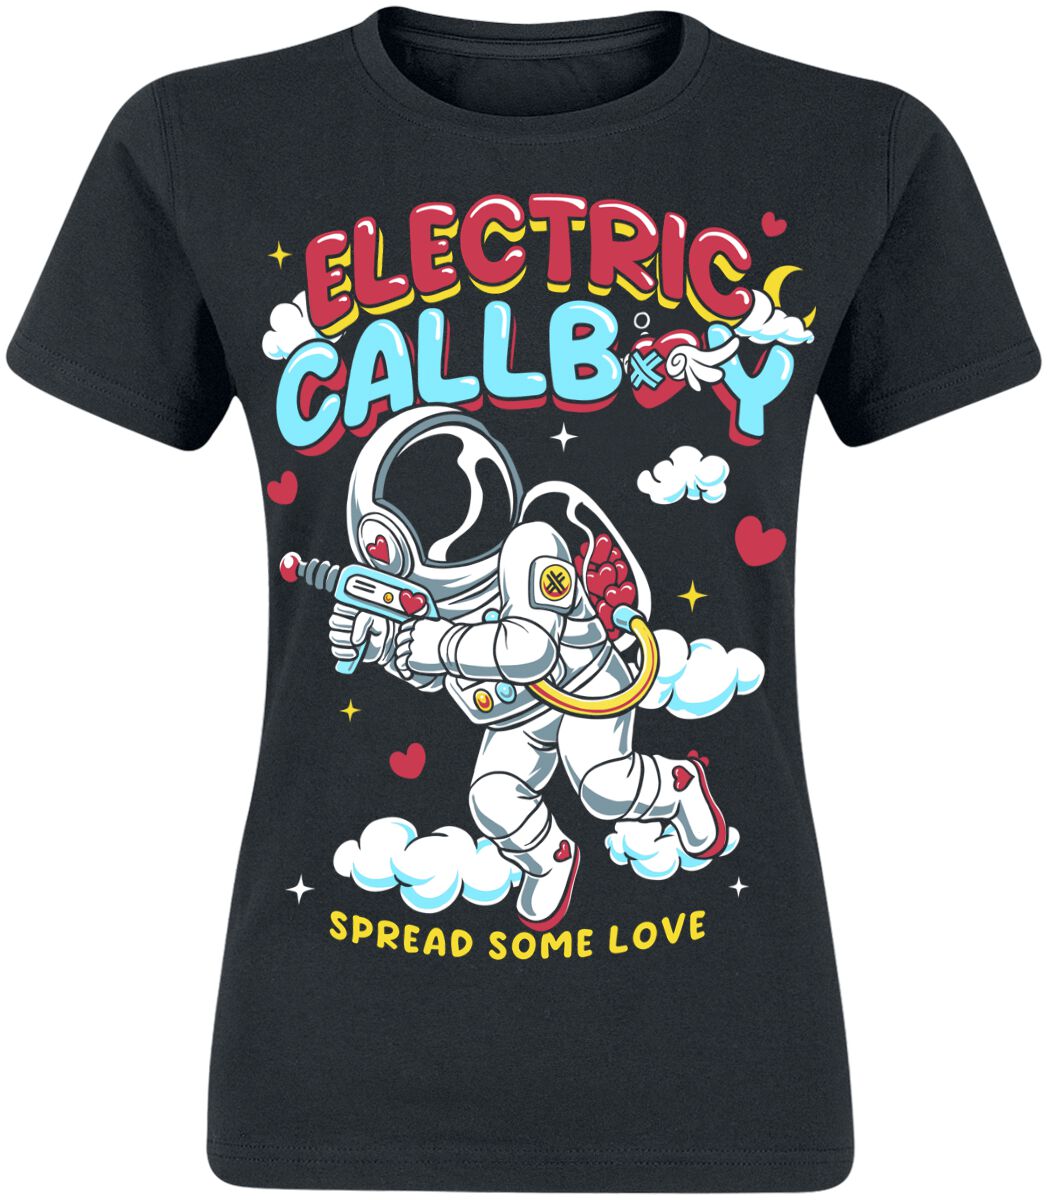 Electric Callboy Spread Some Love T-Shirt schwarz in L